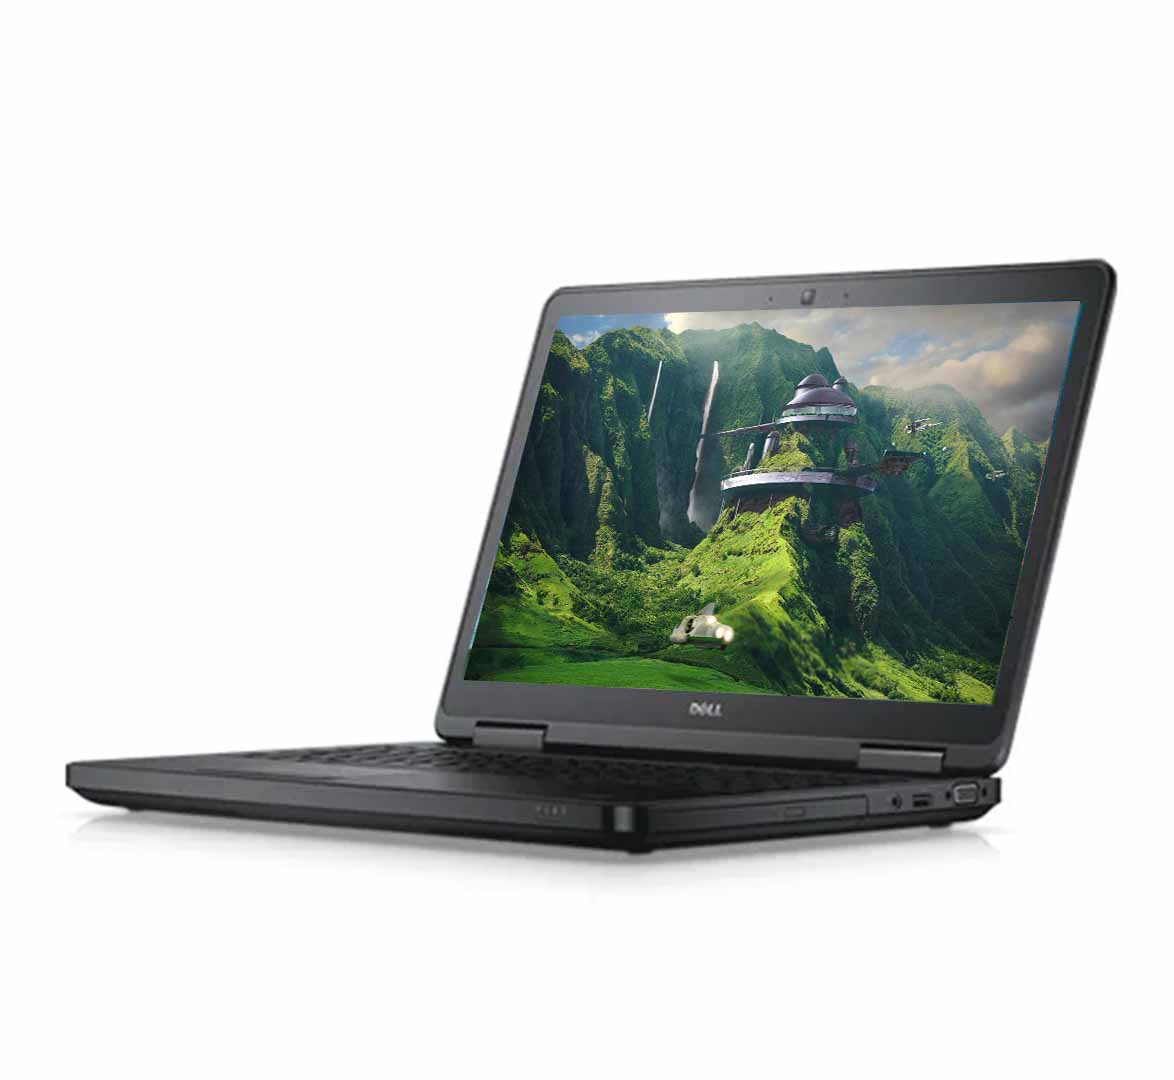 Dell Latitude E5540 Business Laptop, Intel Core i7-4th Generation CPU, 8GB RAM, 500GB HDD, 15.6 inch Display, Windows 10 Pro